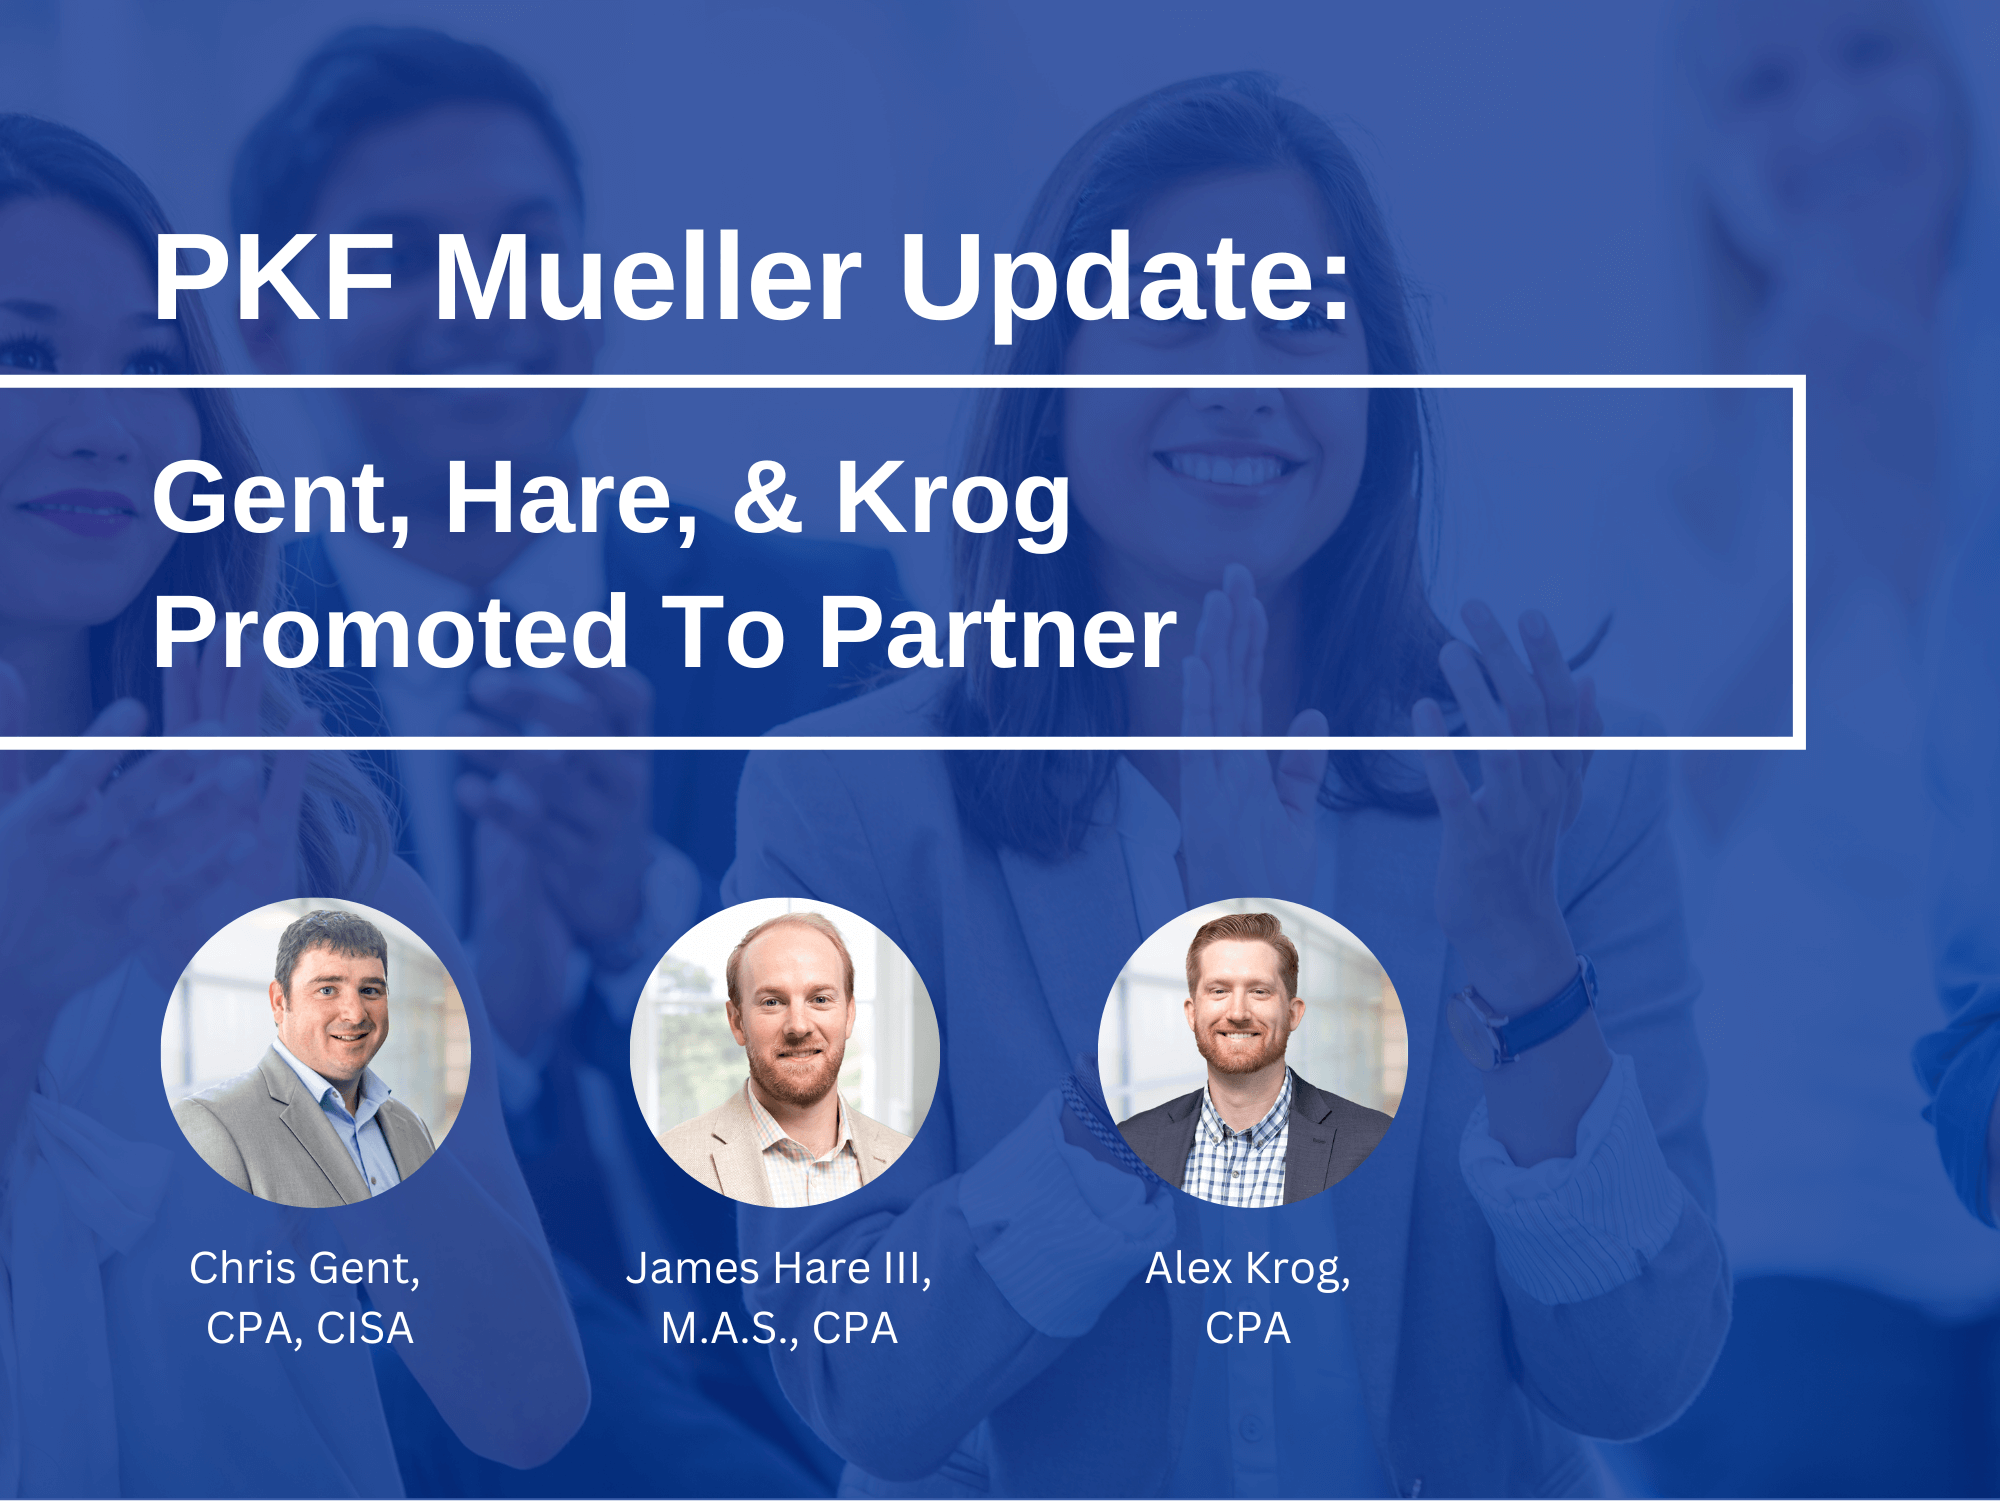 PKF Mueller's Gent, Hare III, and Krog Promoted to Partner 10/1/22.